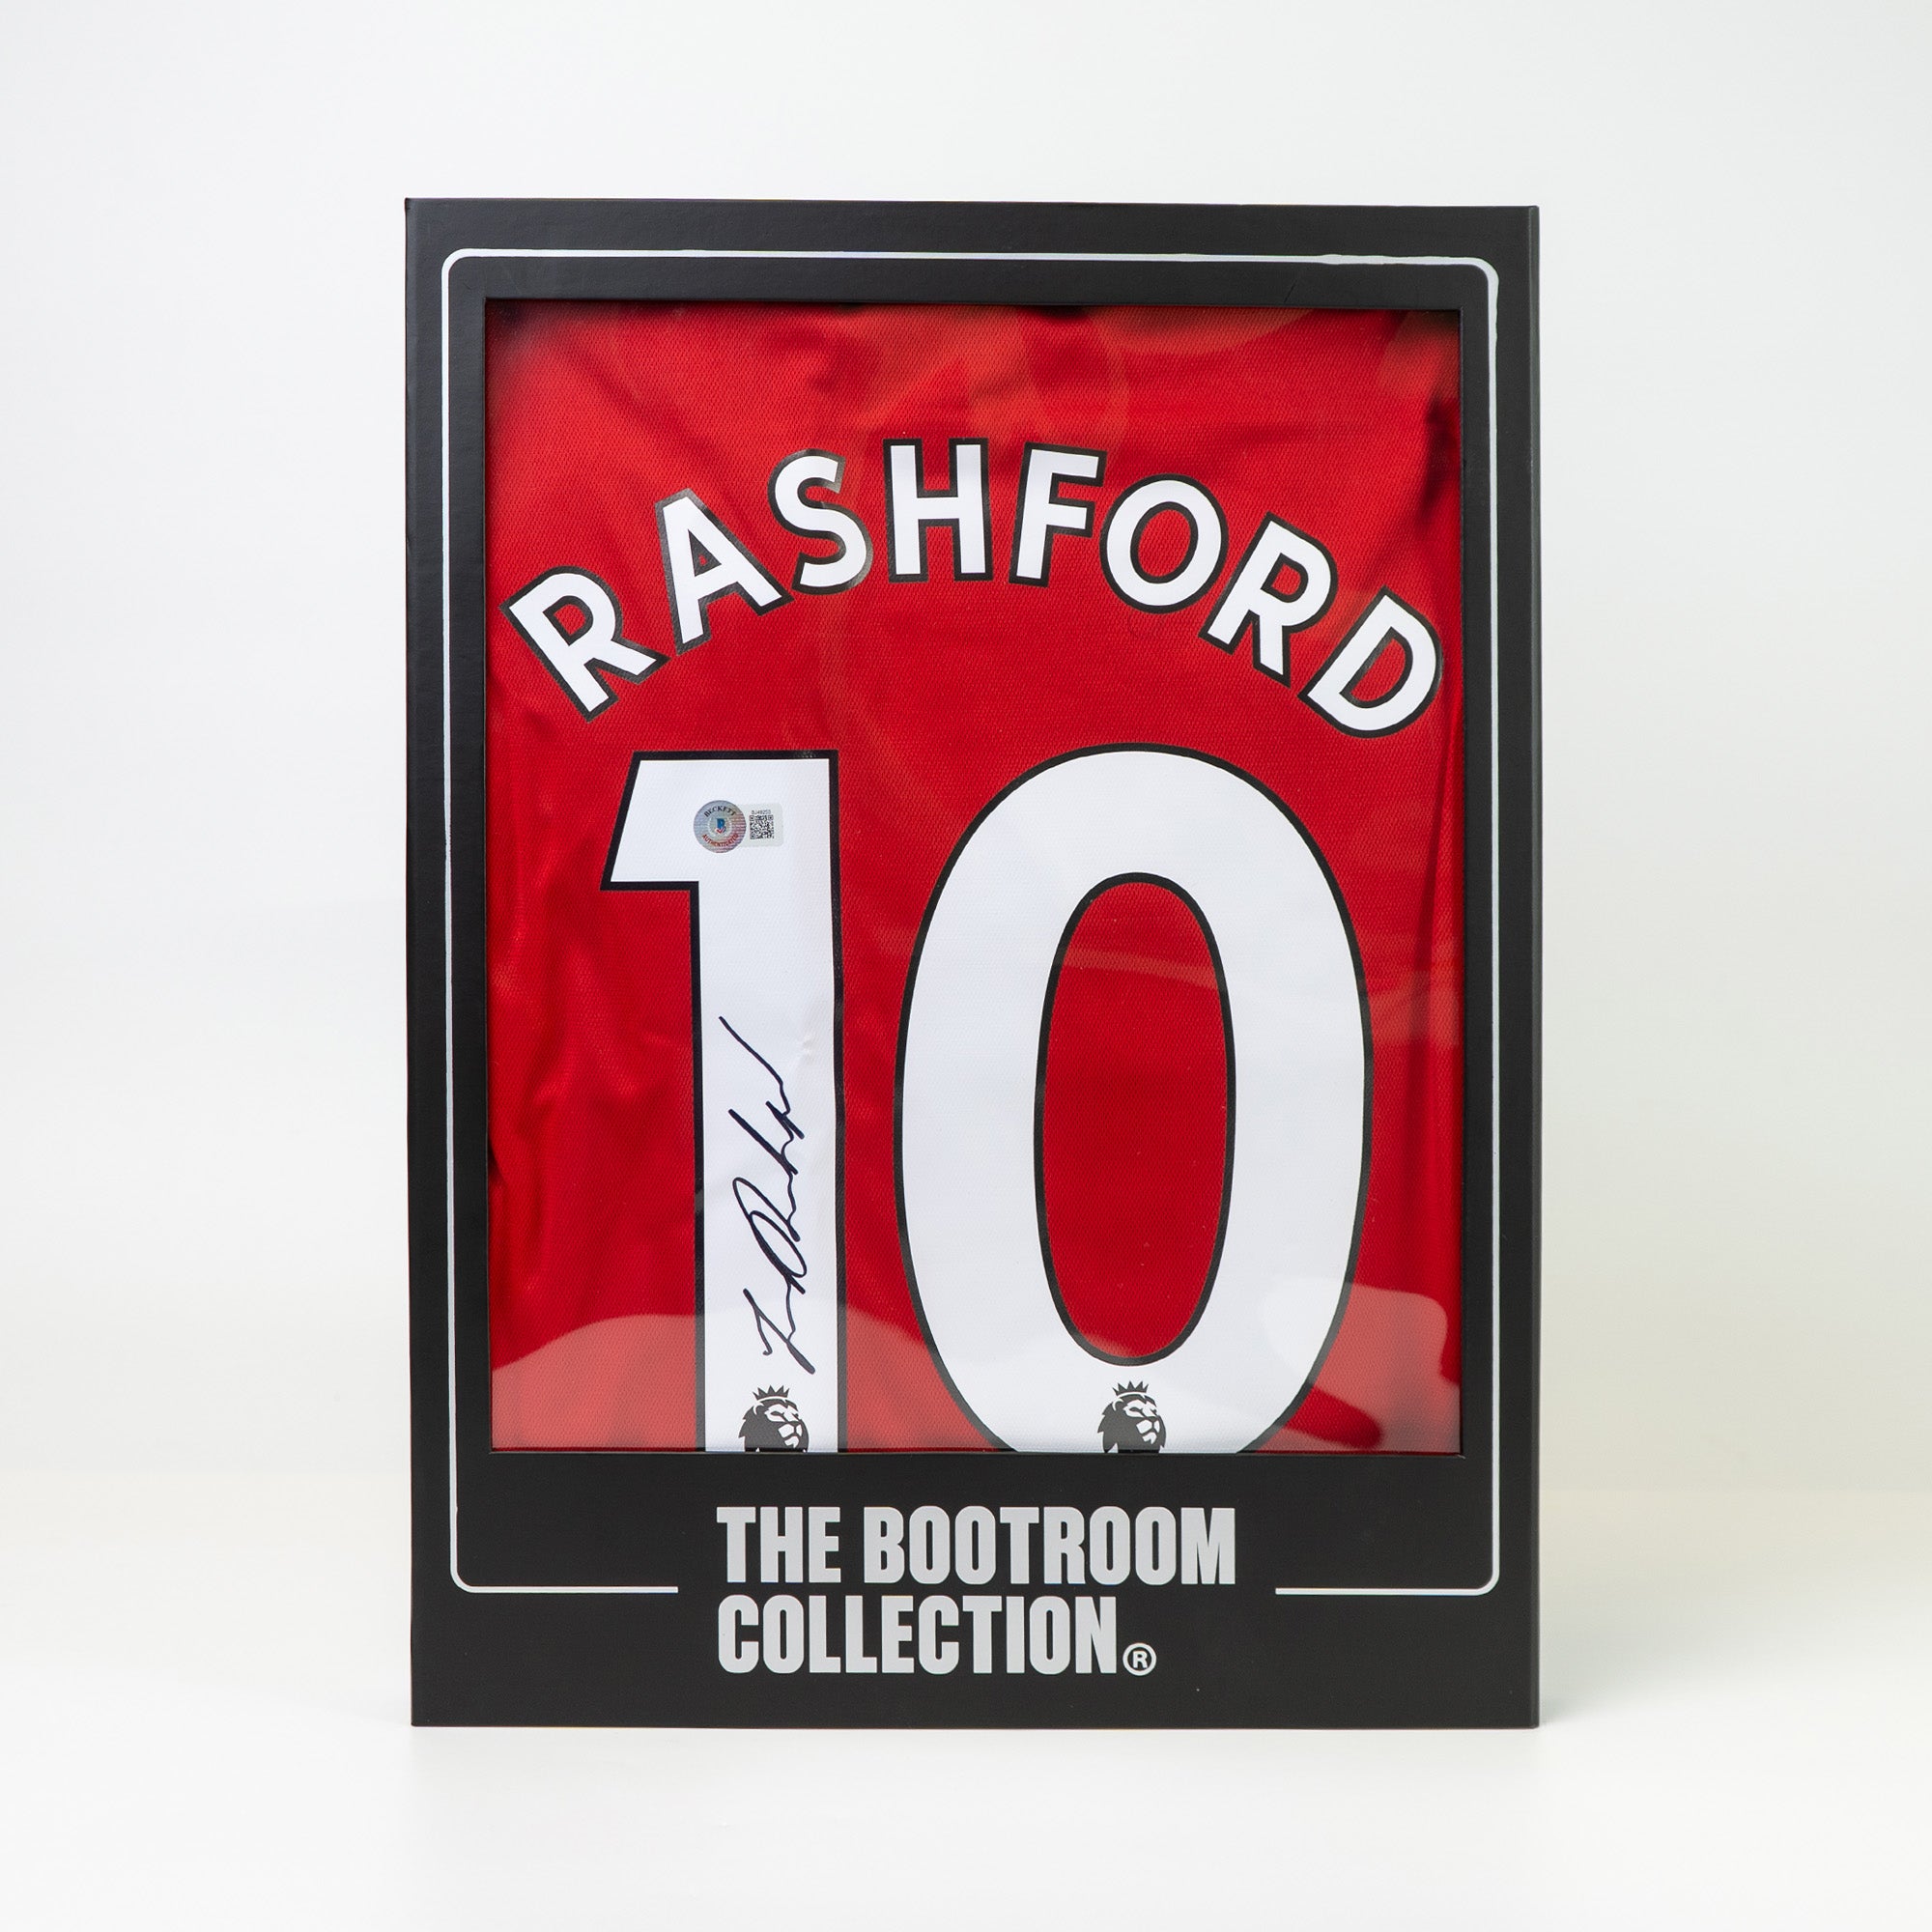 Marcus Rashford Signed Manchester United Home Shirt